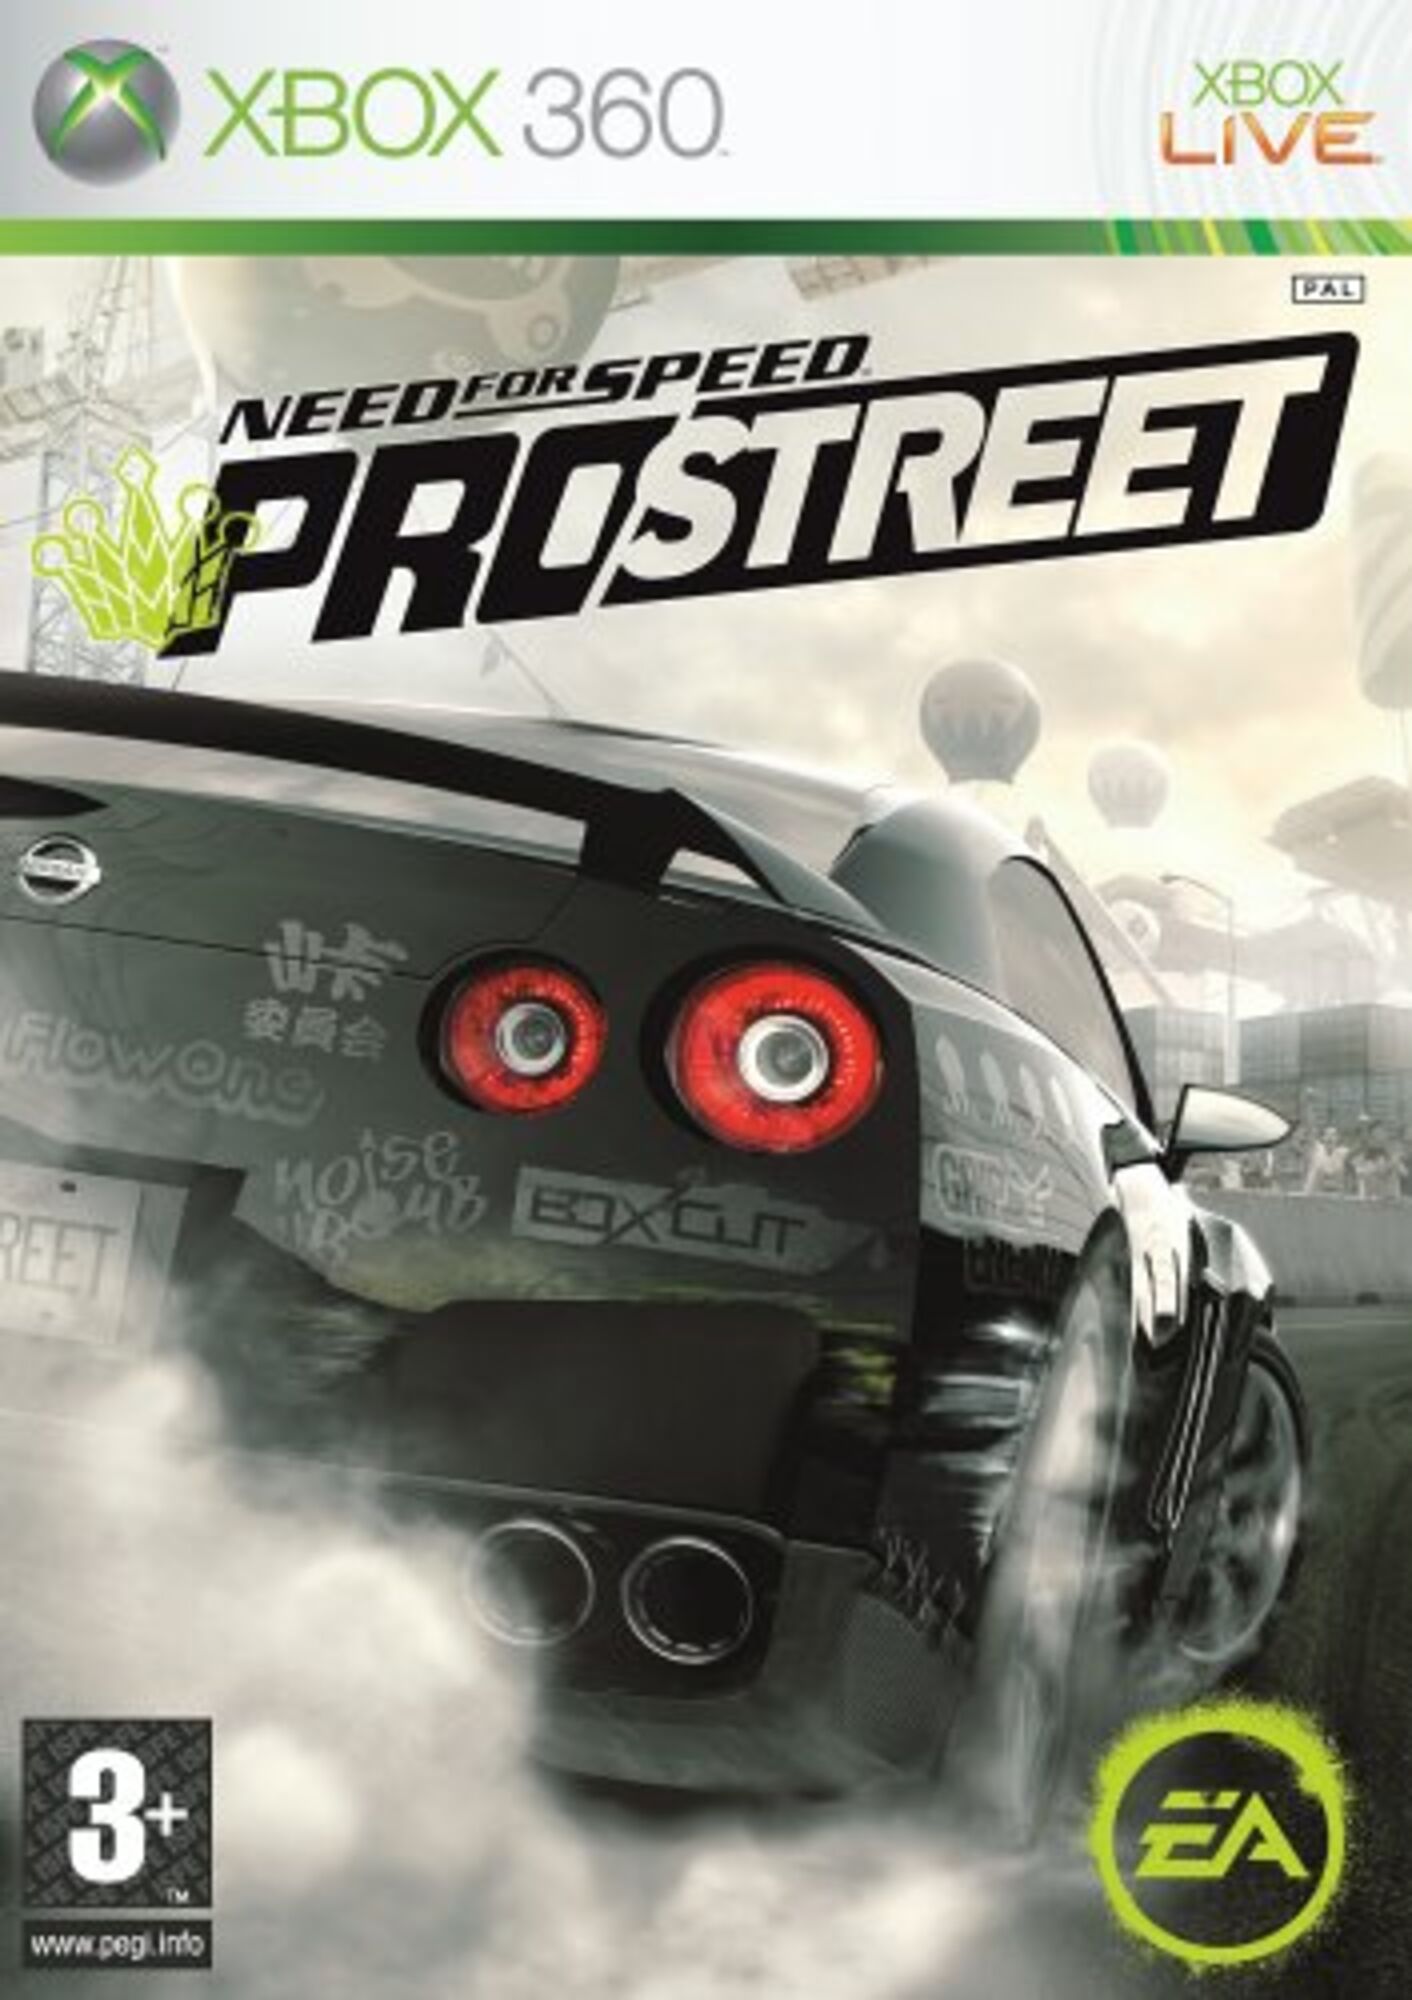 need for speed prostreet cheats xbox 360